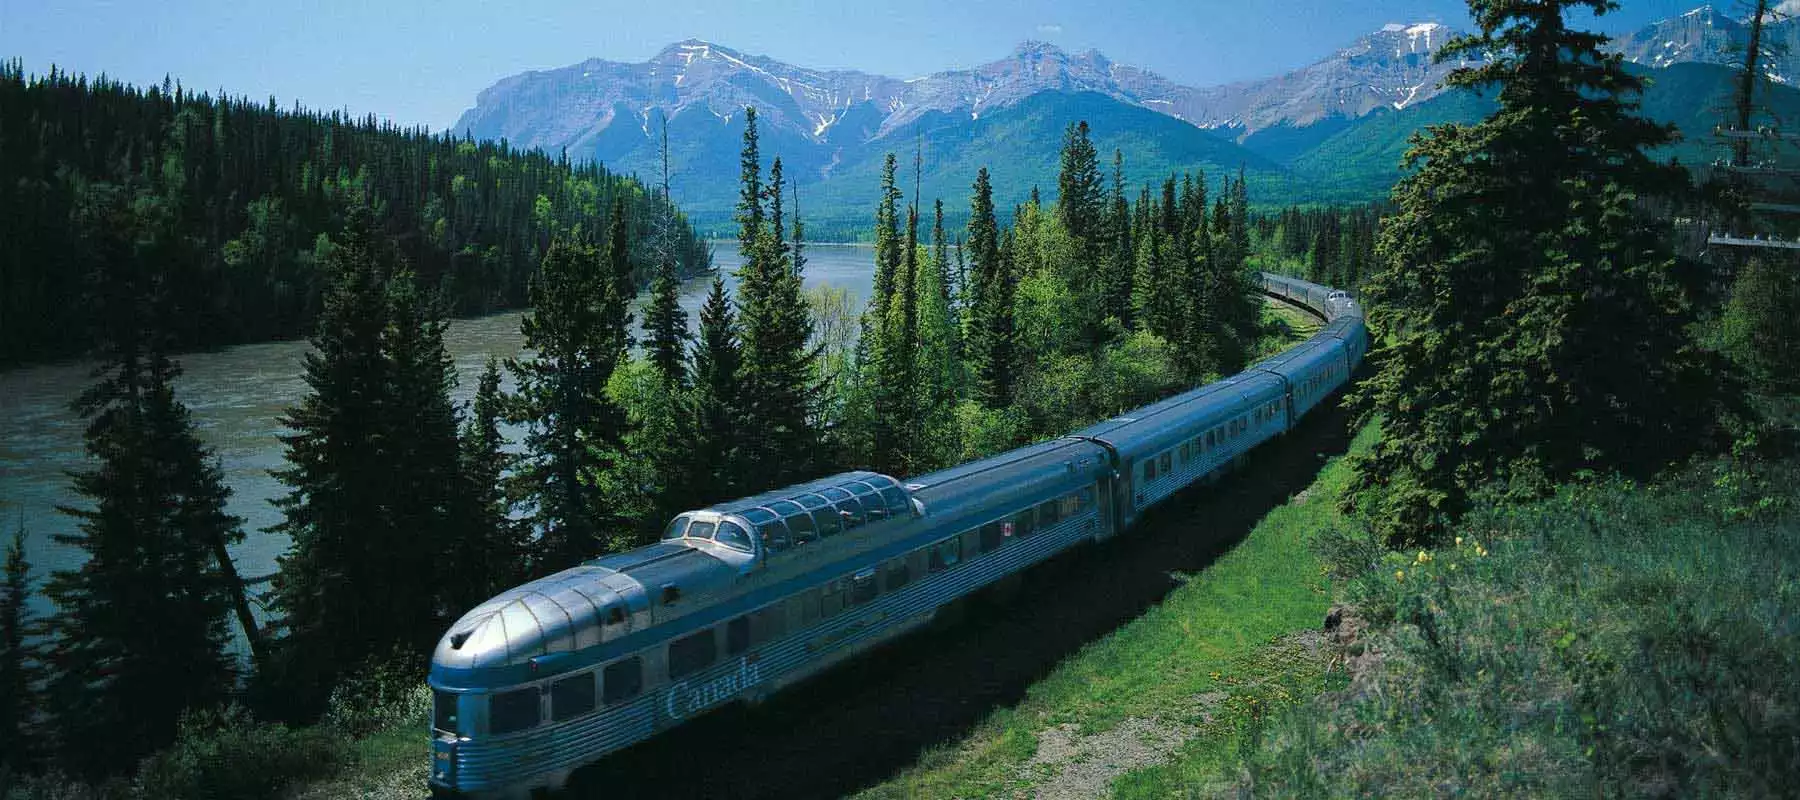 Canada Rail Vacations